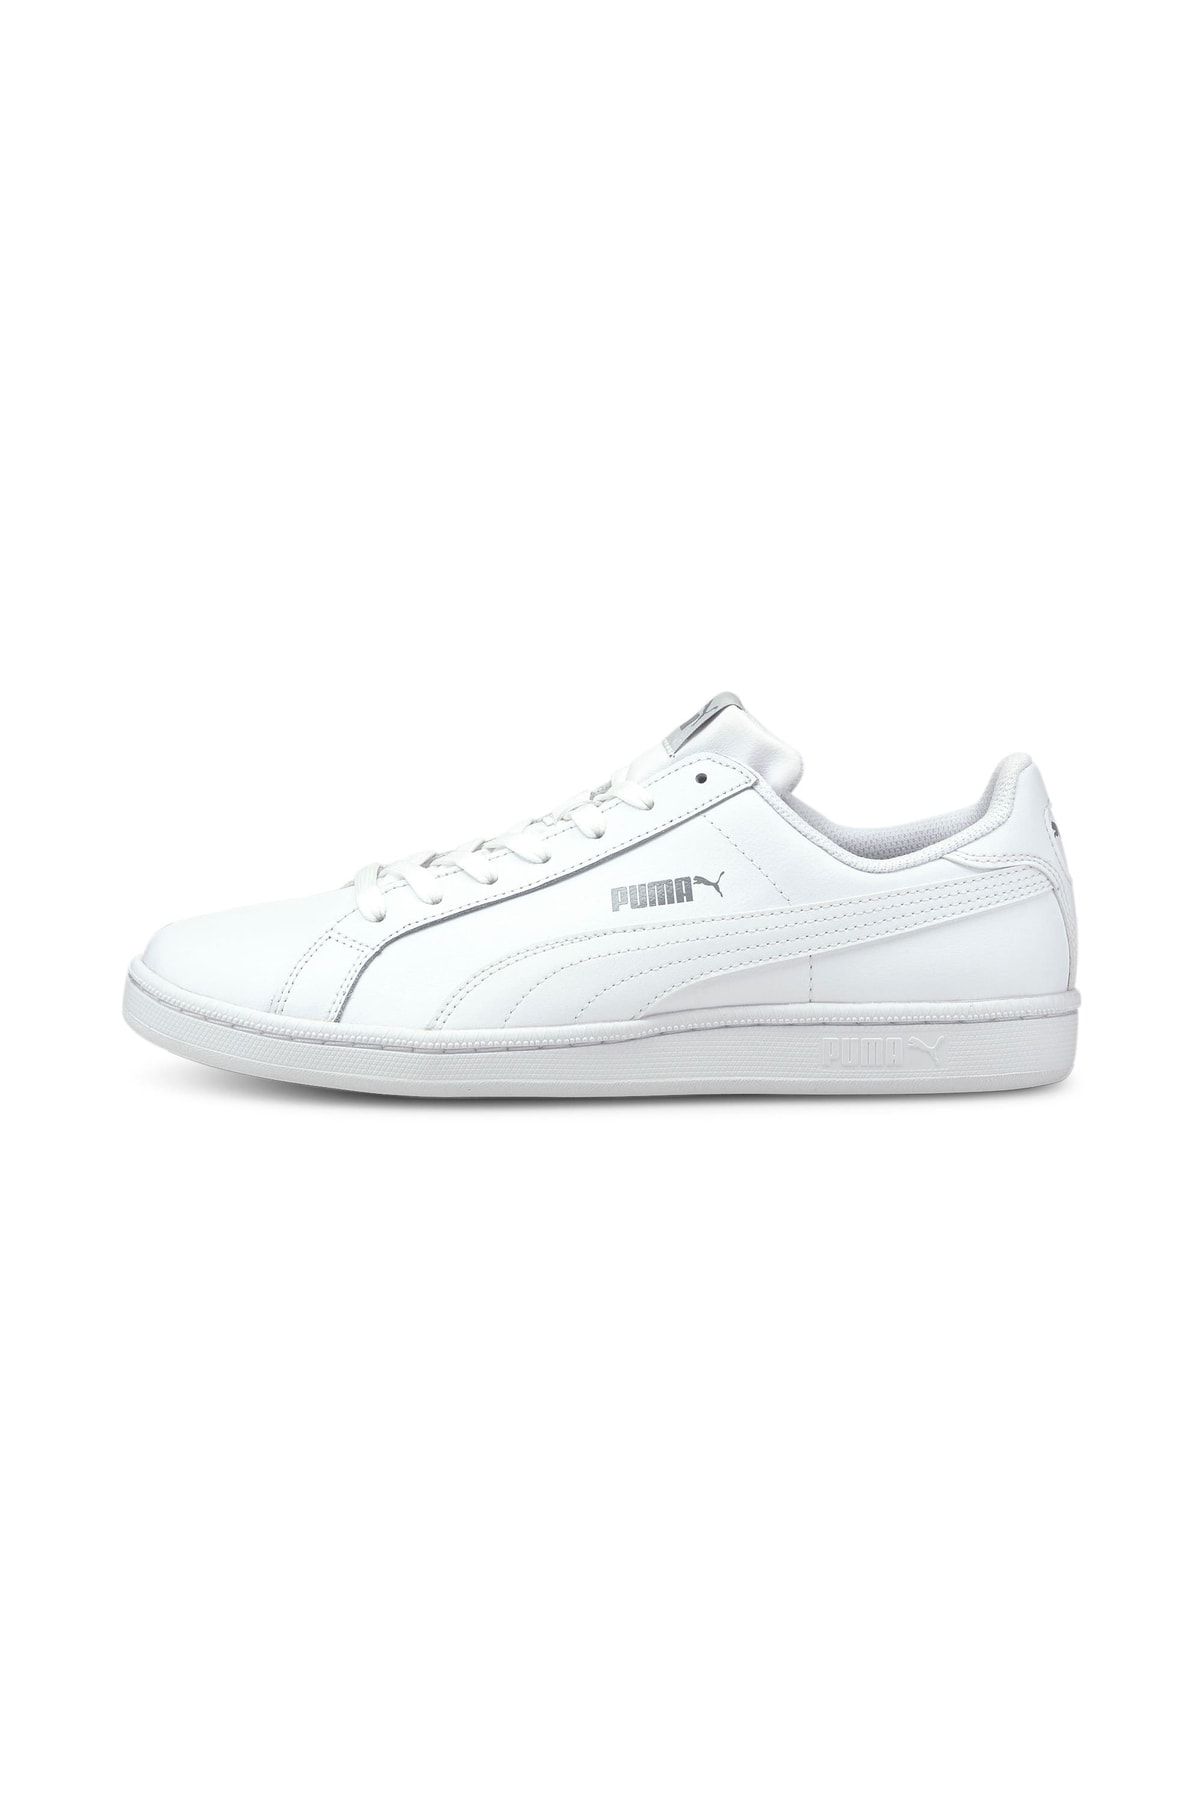 Puma Smash Leather- Beyaz Unisex Sneaker